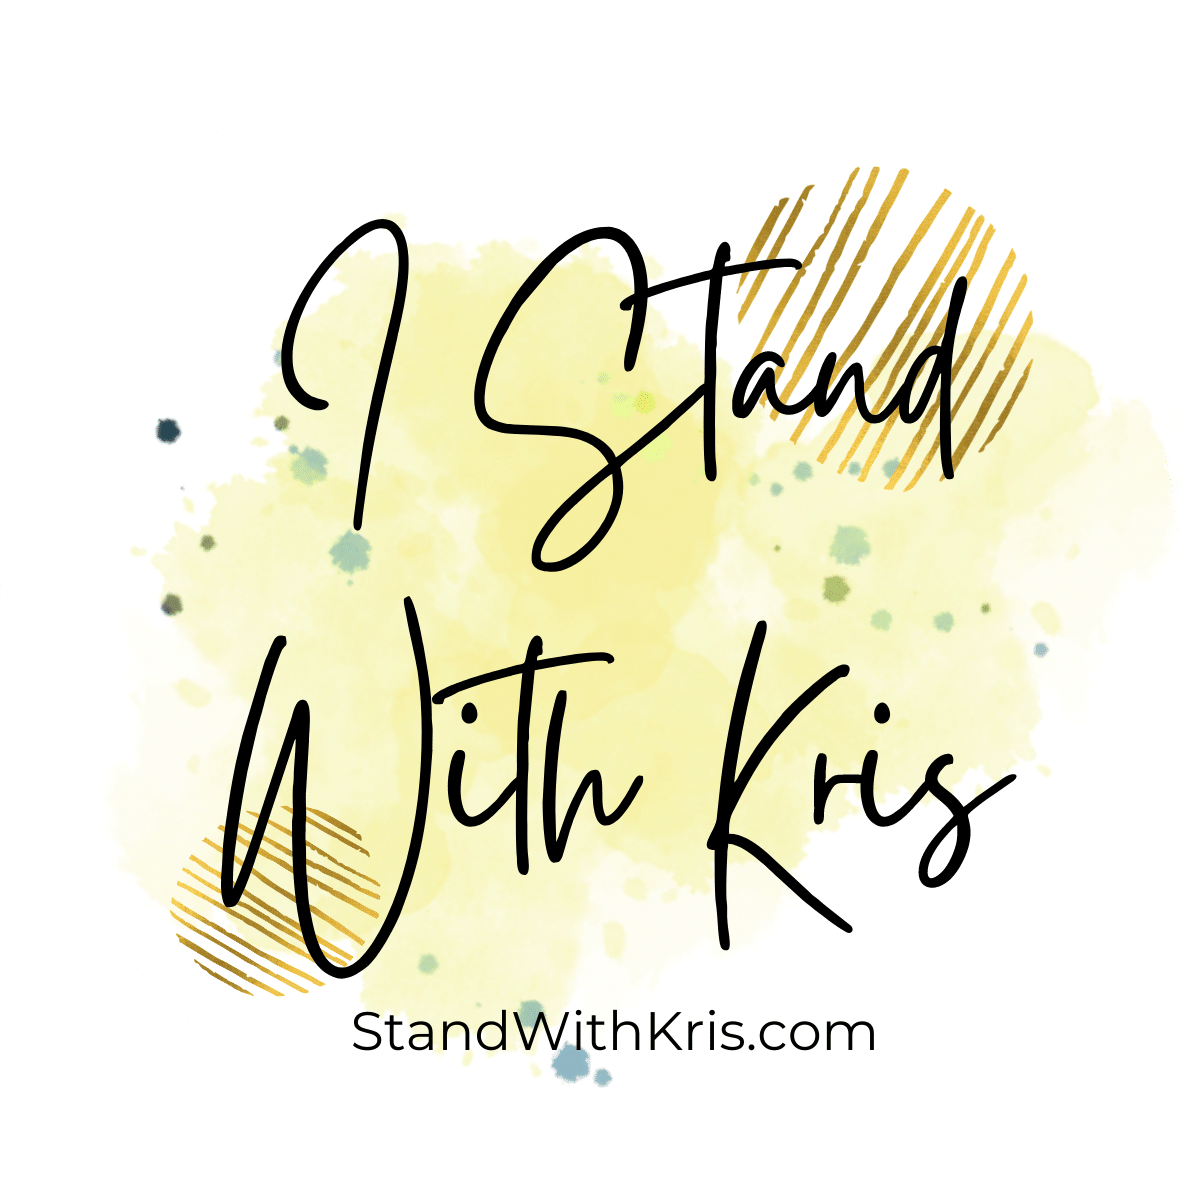 I Stand With Kris<br />
StandWithKris.com